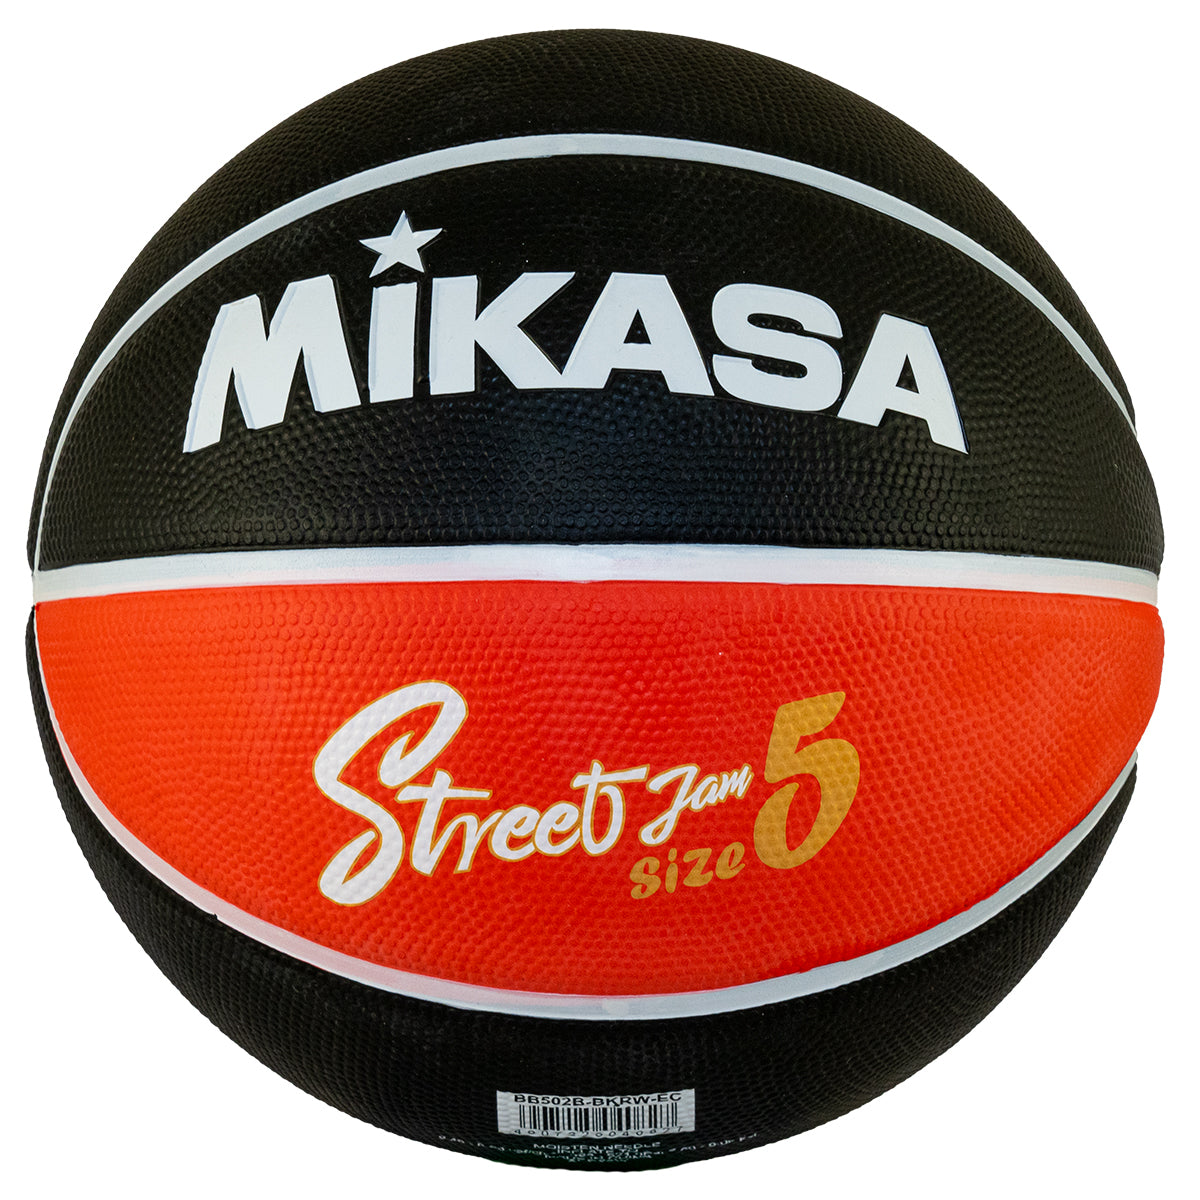 Mikasa Street Jam Basketball